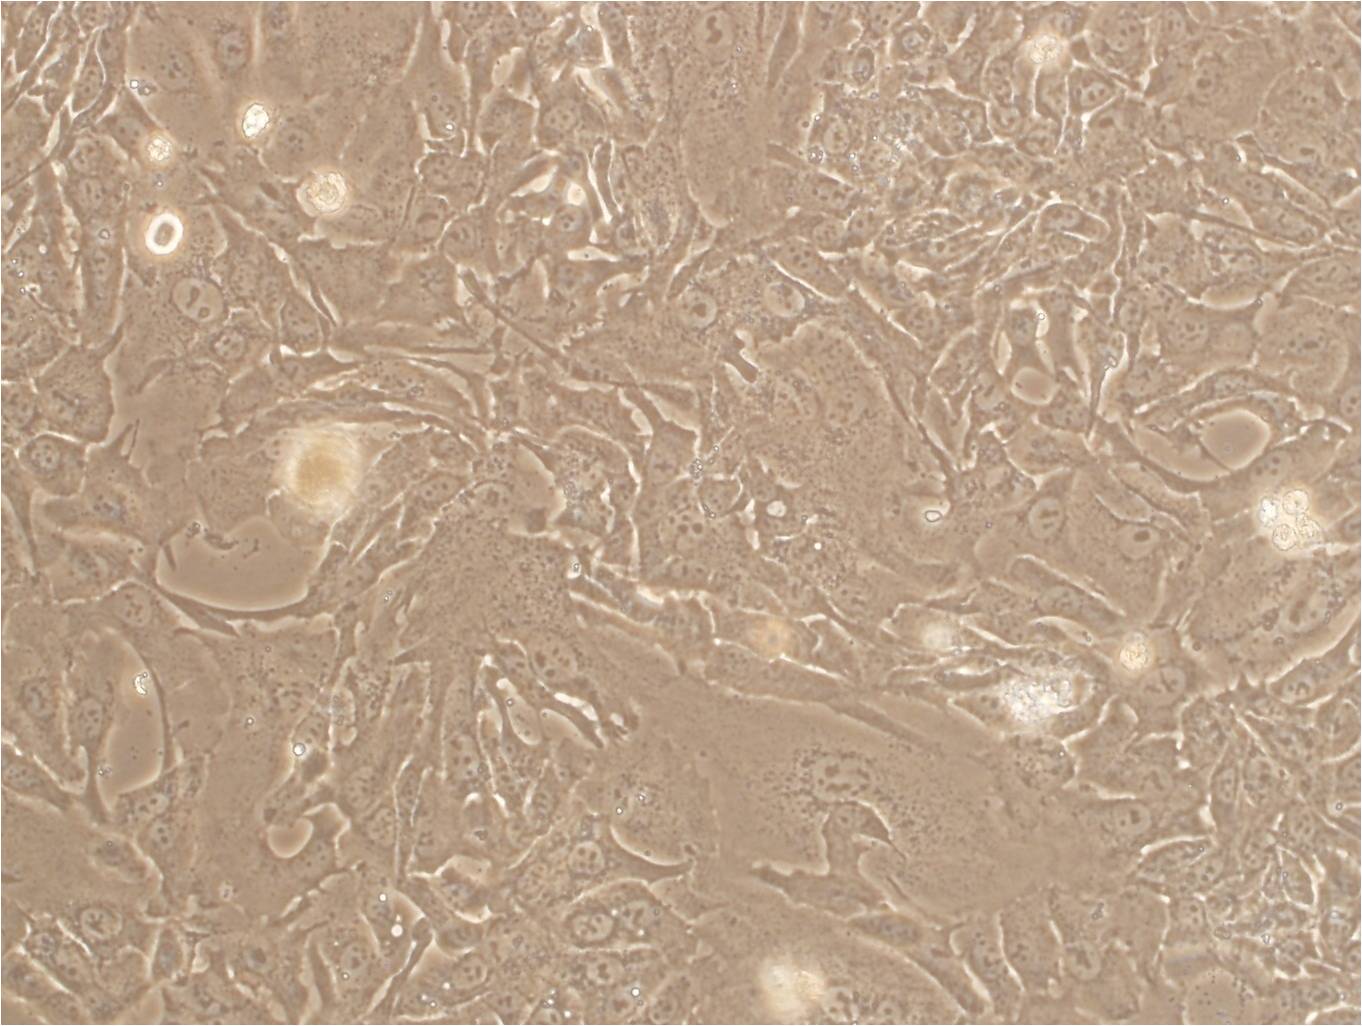 FL 62891 epithelioid cells人肝细胞系